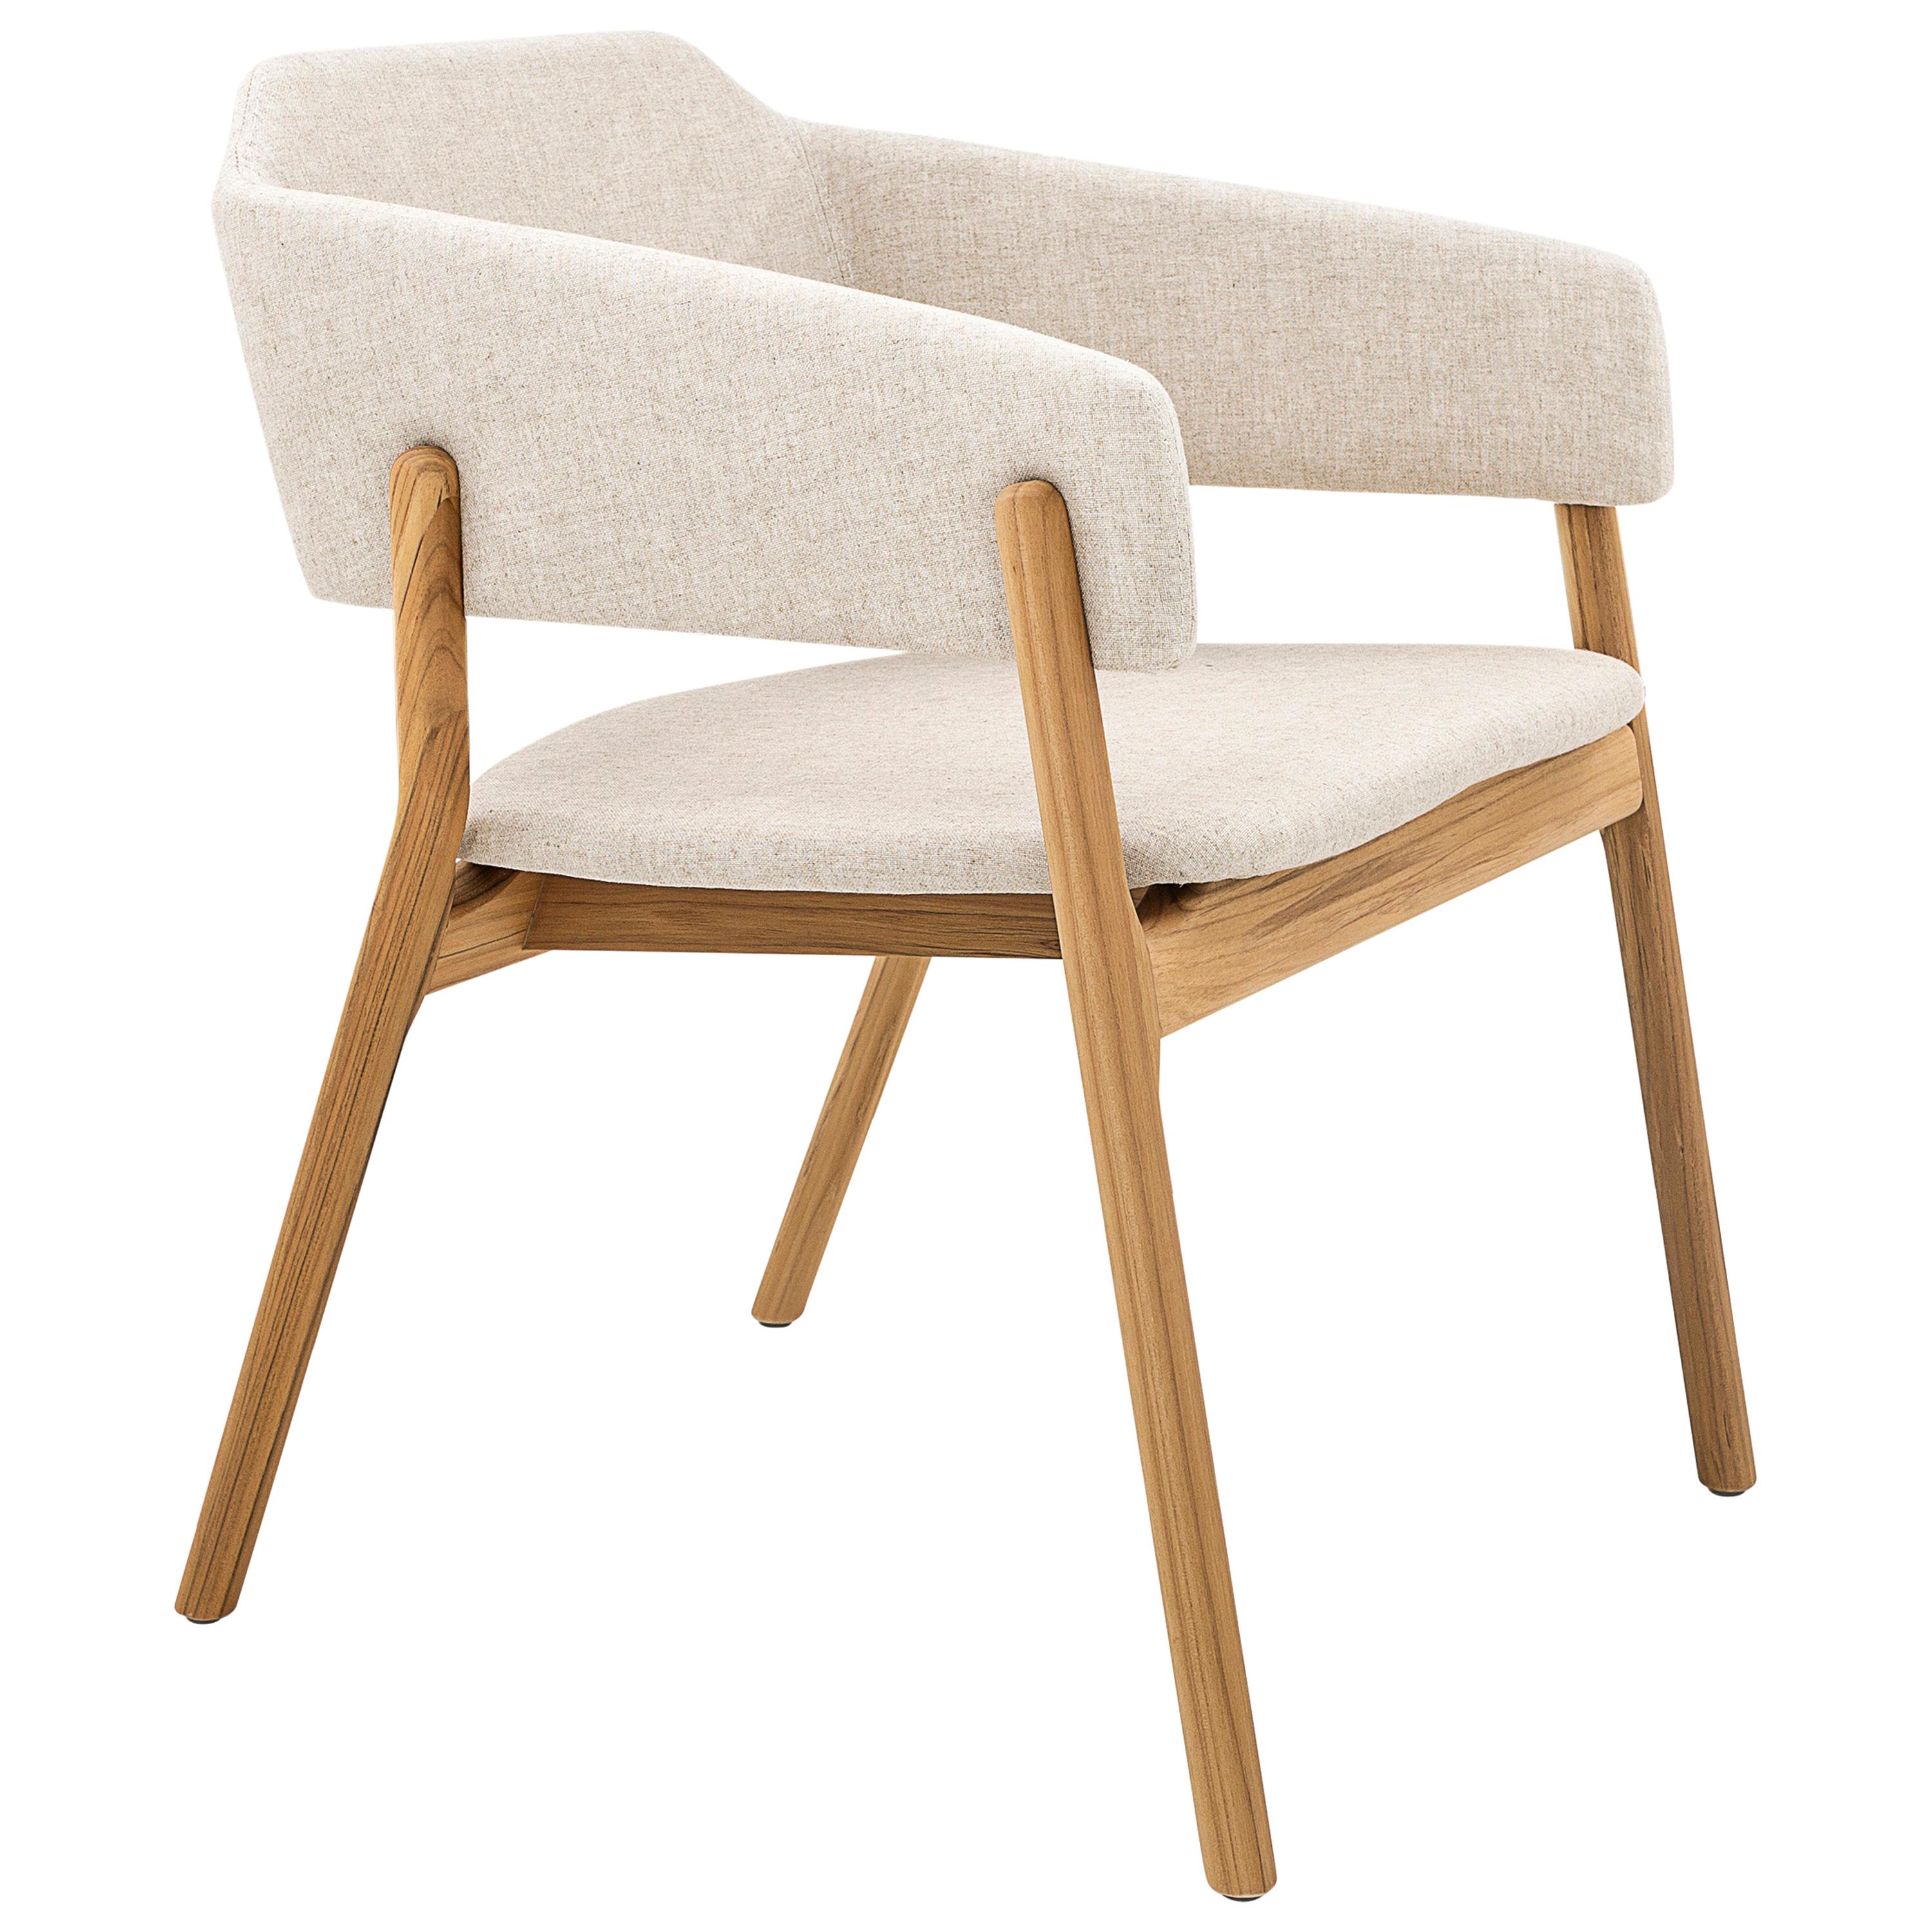 Stuzi Chair in Teak Wood Finish with Oatmeal Fabric